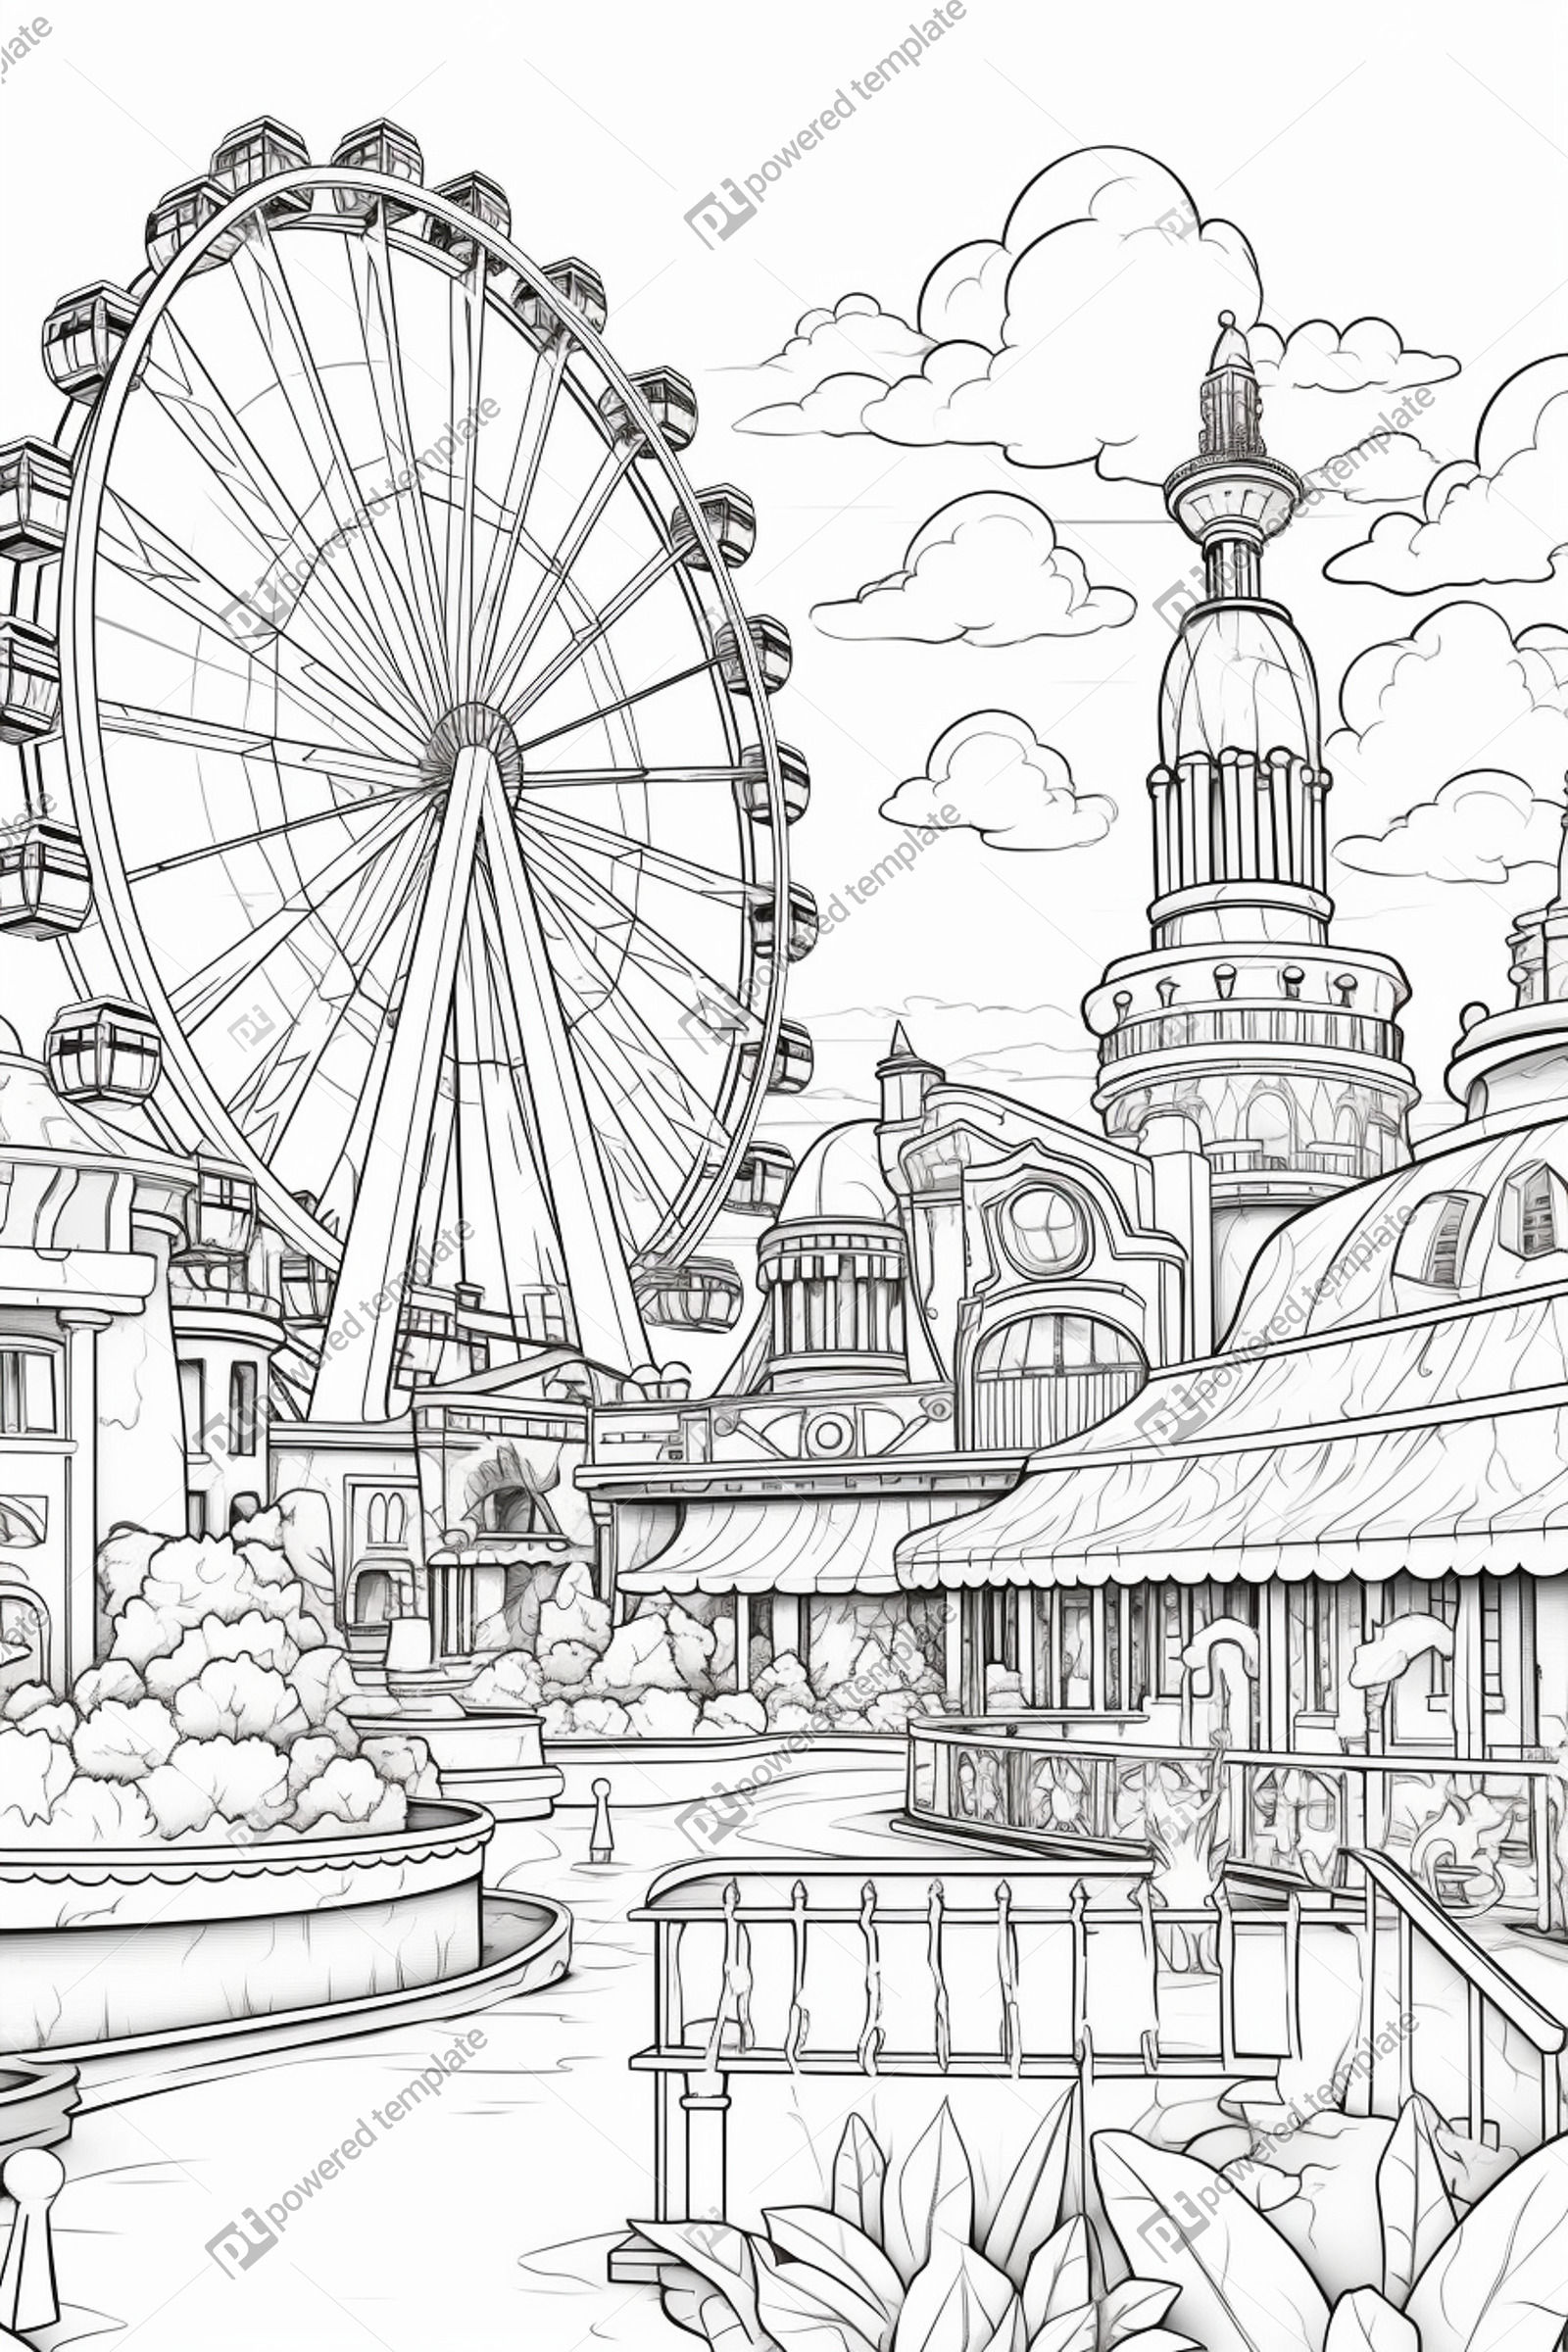 Cartoon-style Coloring Book Astroworld Amusement Park | AI Image ...